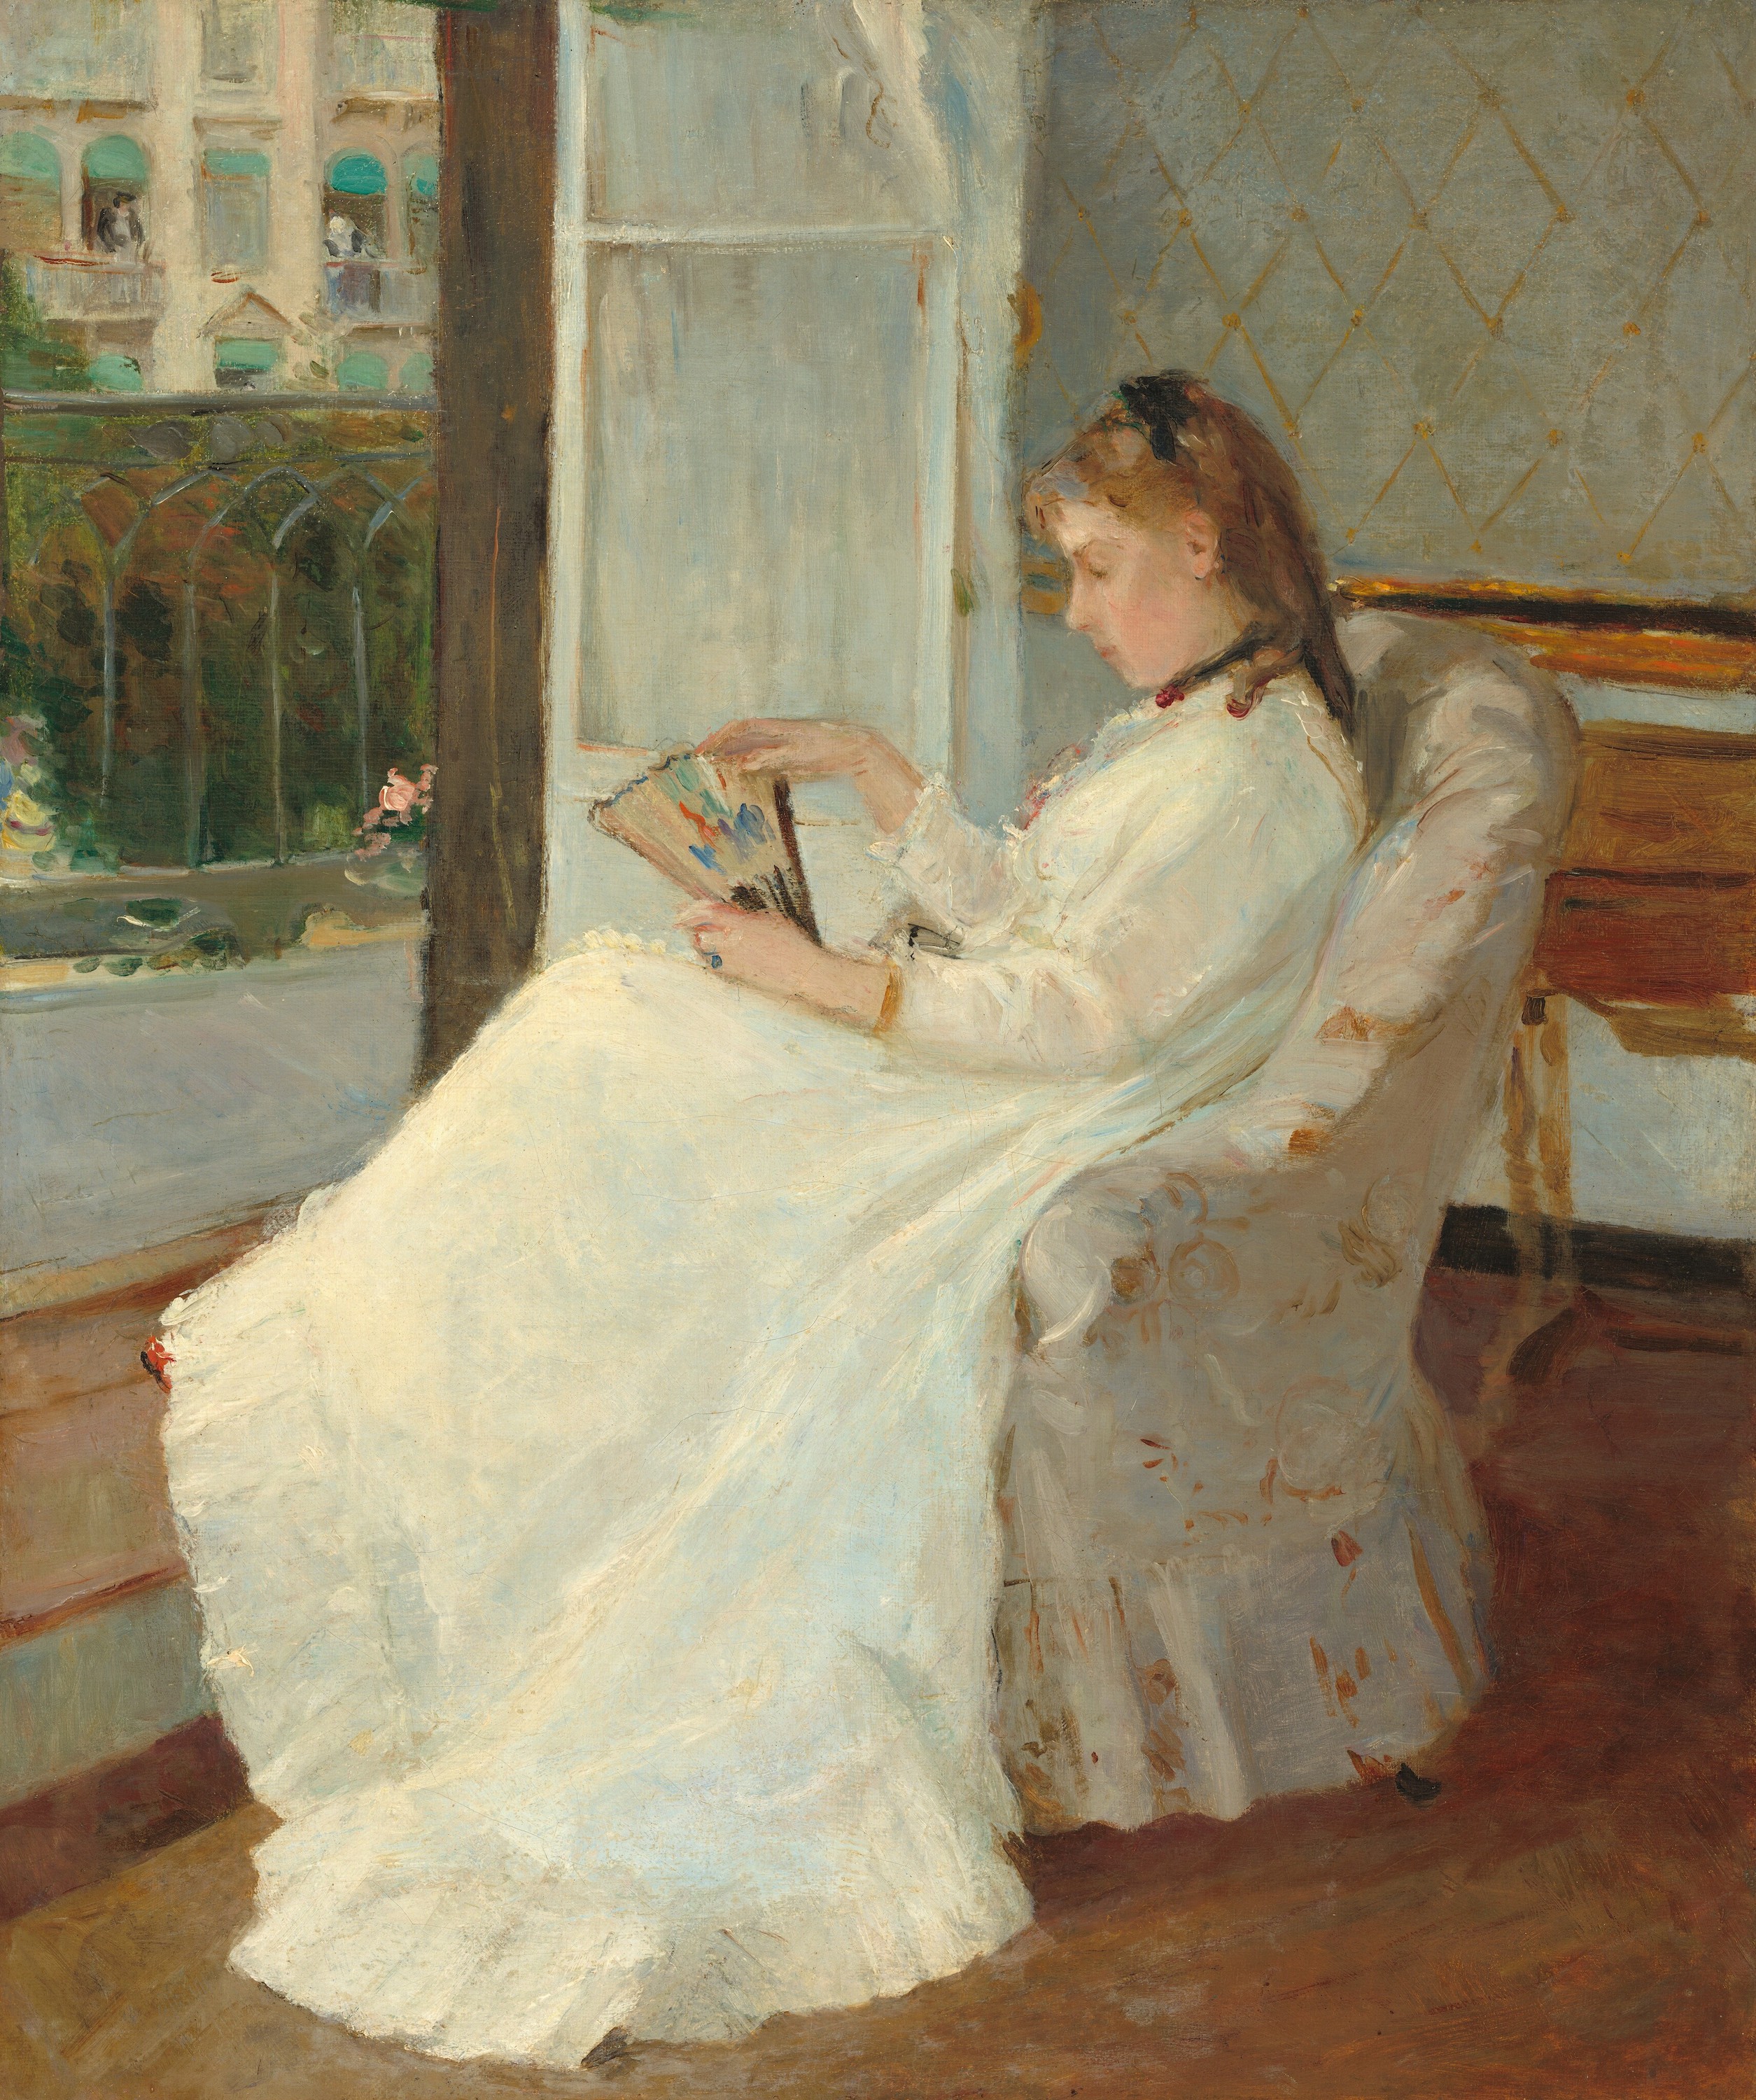 Сестра Умјетнице поред прозора by Berthe Morisot - 1869 - 54.8 x 46.3 cm 